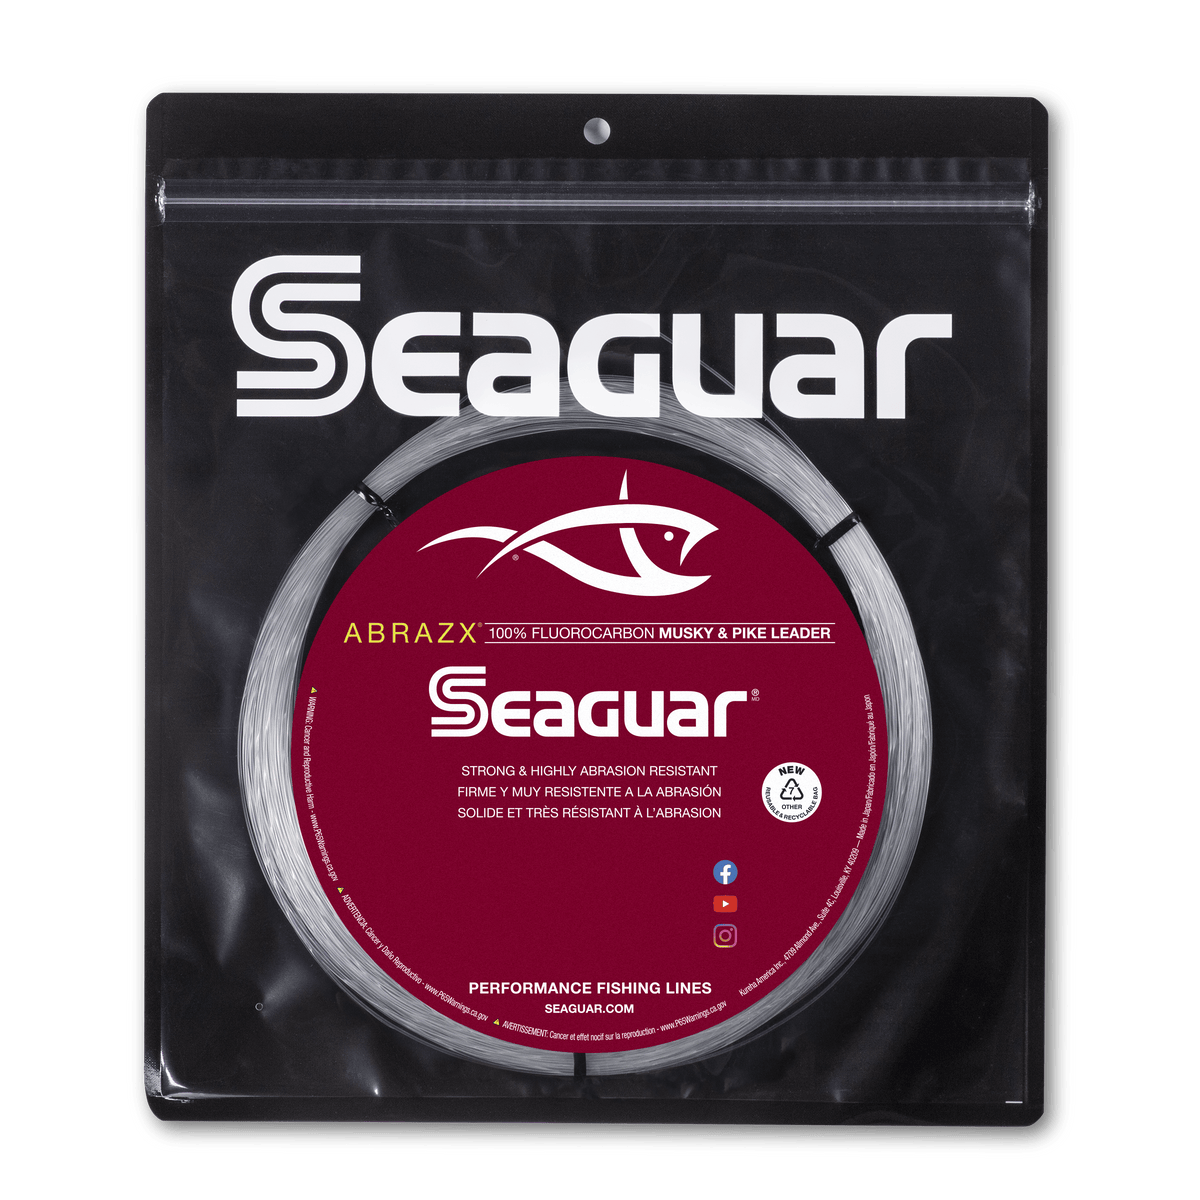 Seaguar AbrazX Fluorocarbon 12lb 200yd Spool